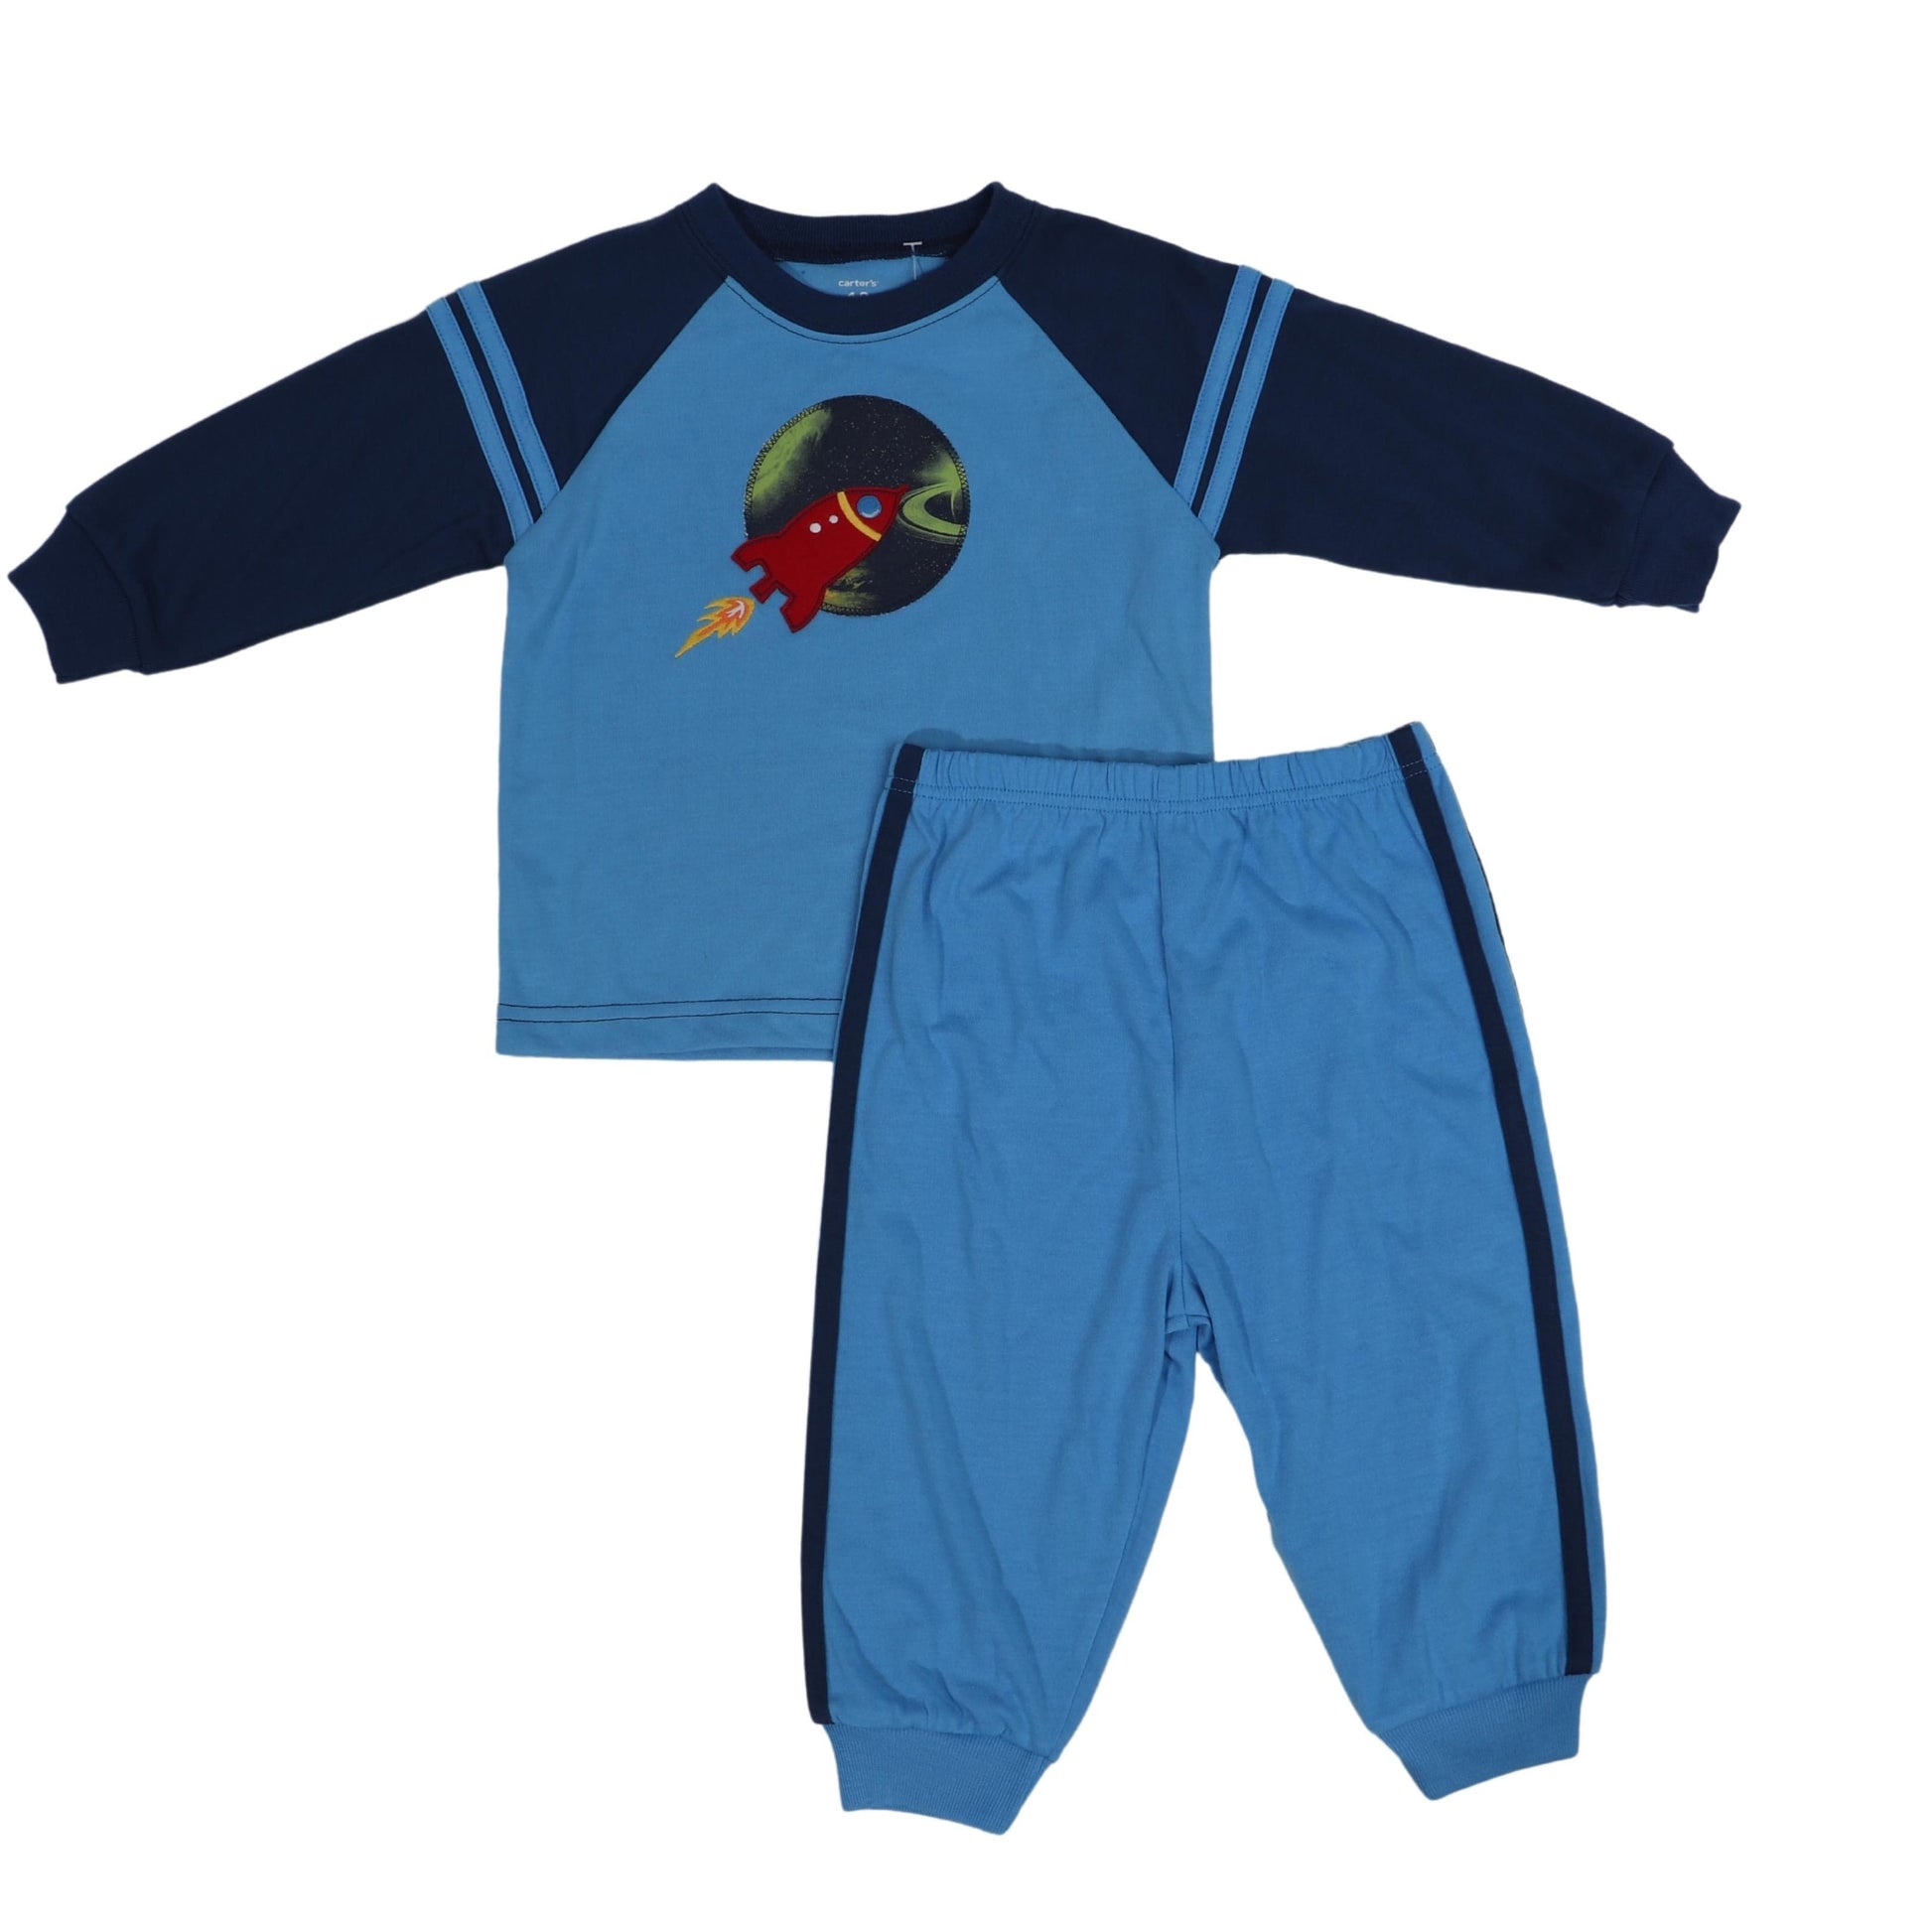 CARTER'S Baby Boy 18 Month / Blue CARTER'S - Short Sleeve Pajama Set